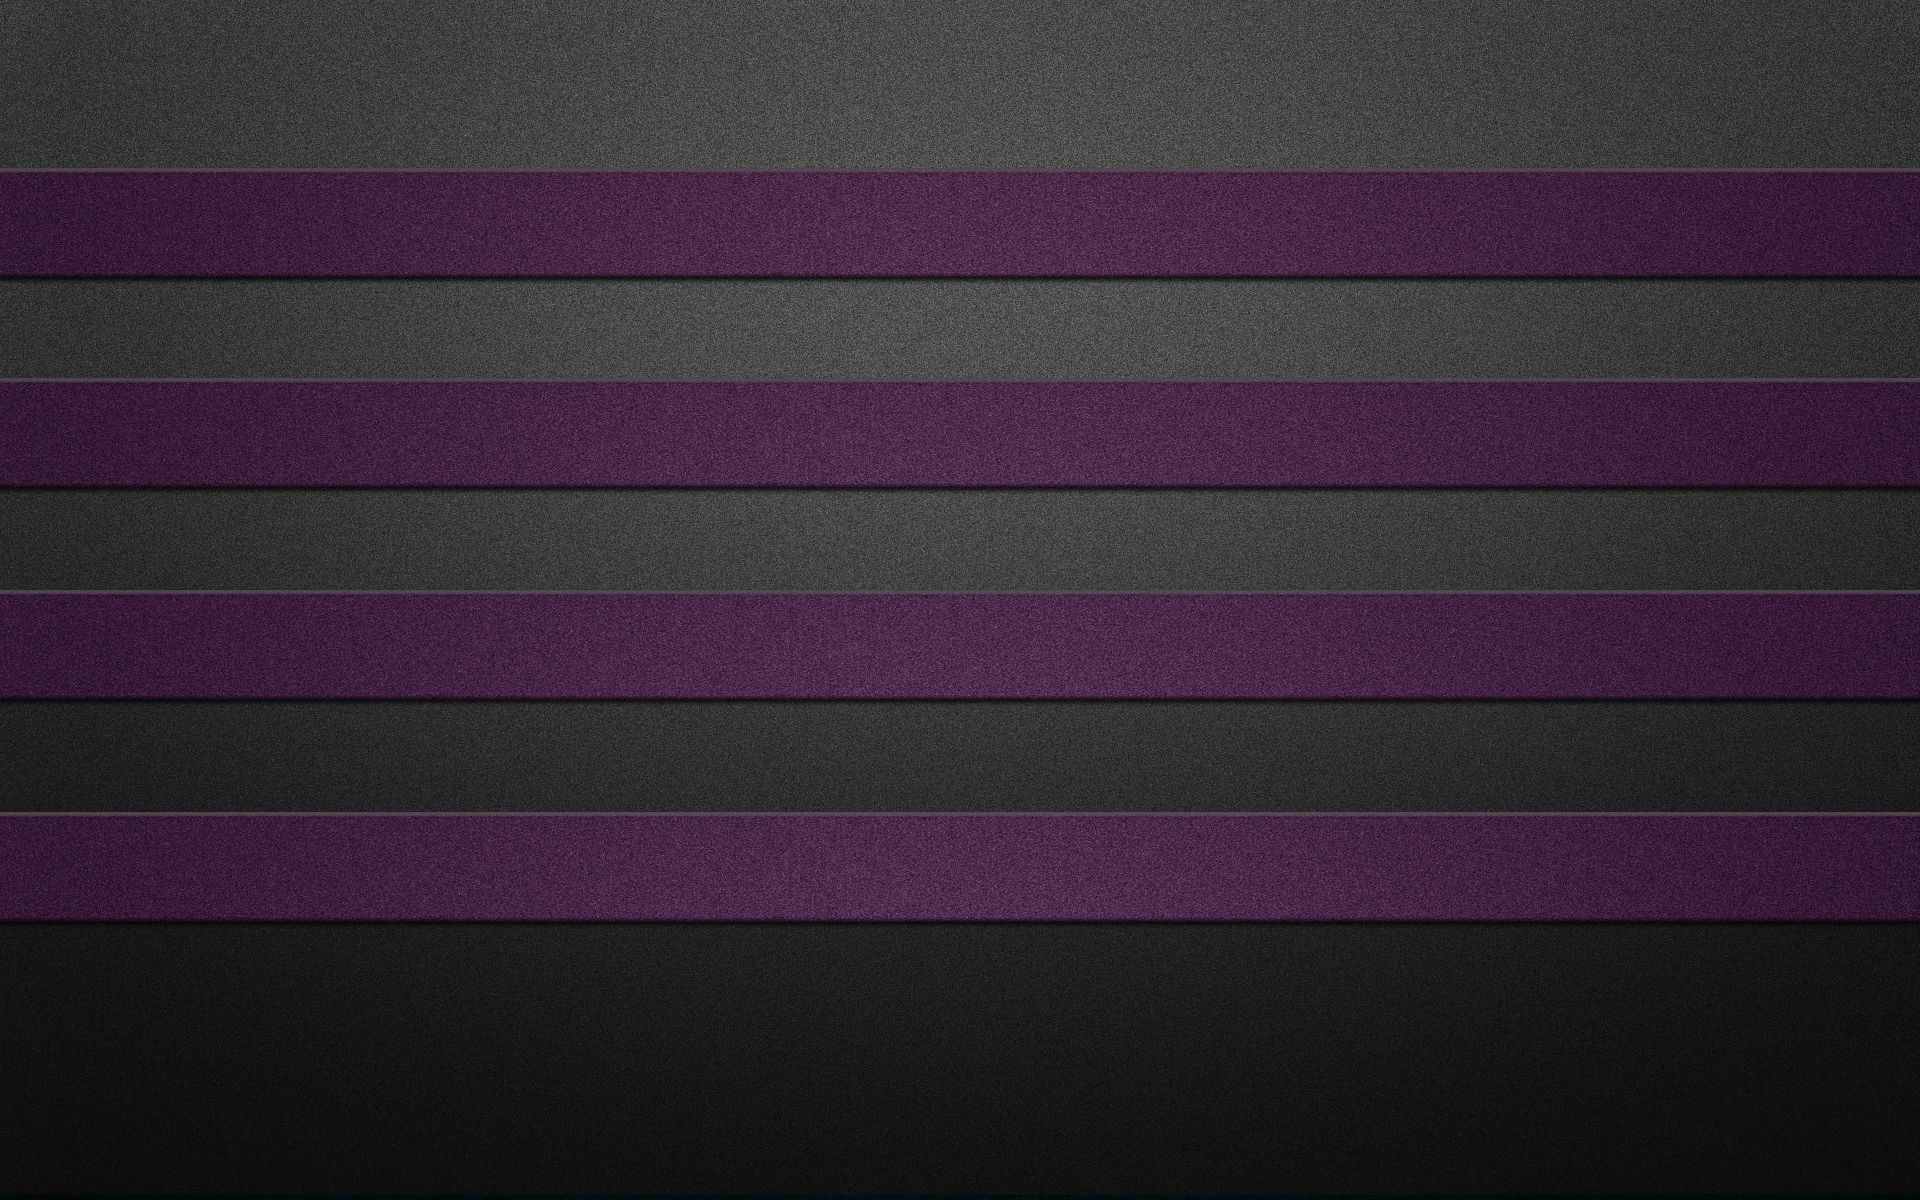 streaks, black and white, textures, stripes, texture, violet, purple, four